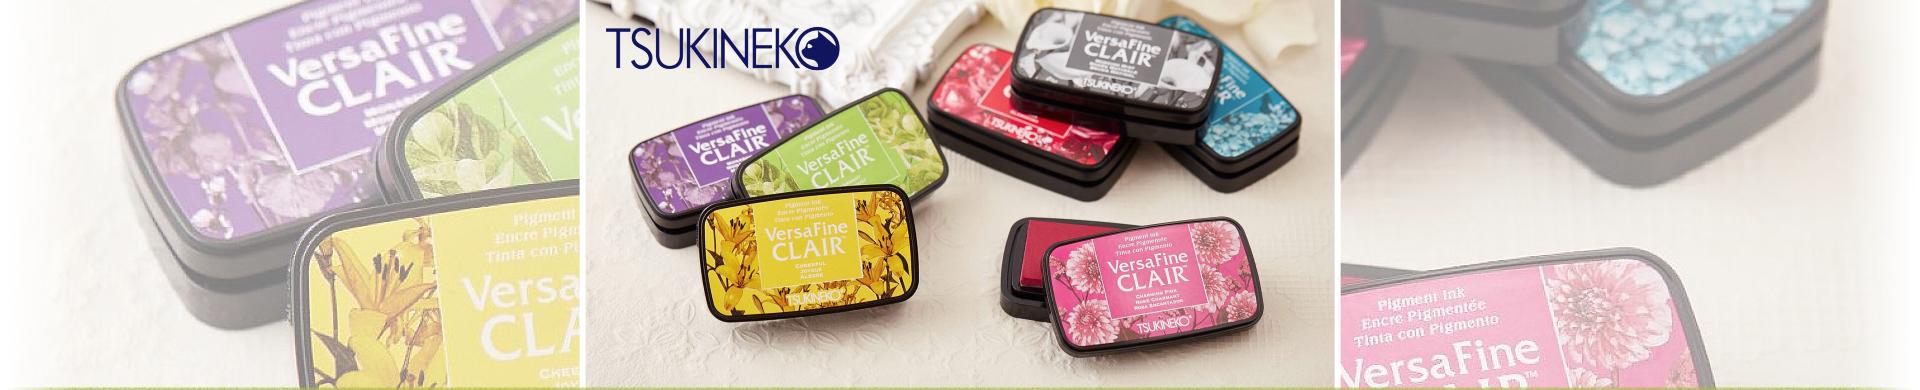 Nijico Ink Pad, Tsukineko Rainbow Rubber Stamp Ink Pad, Pastel Water Based  Pigment Ink 